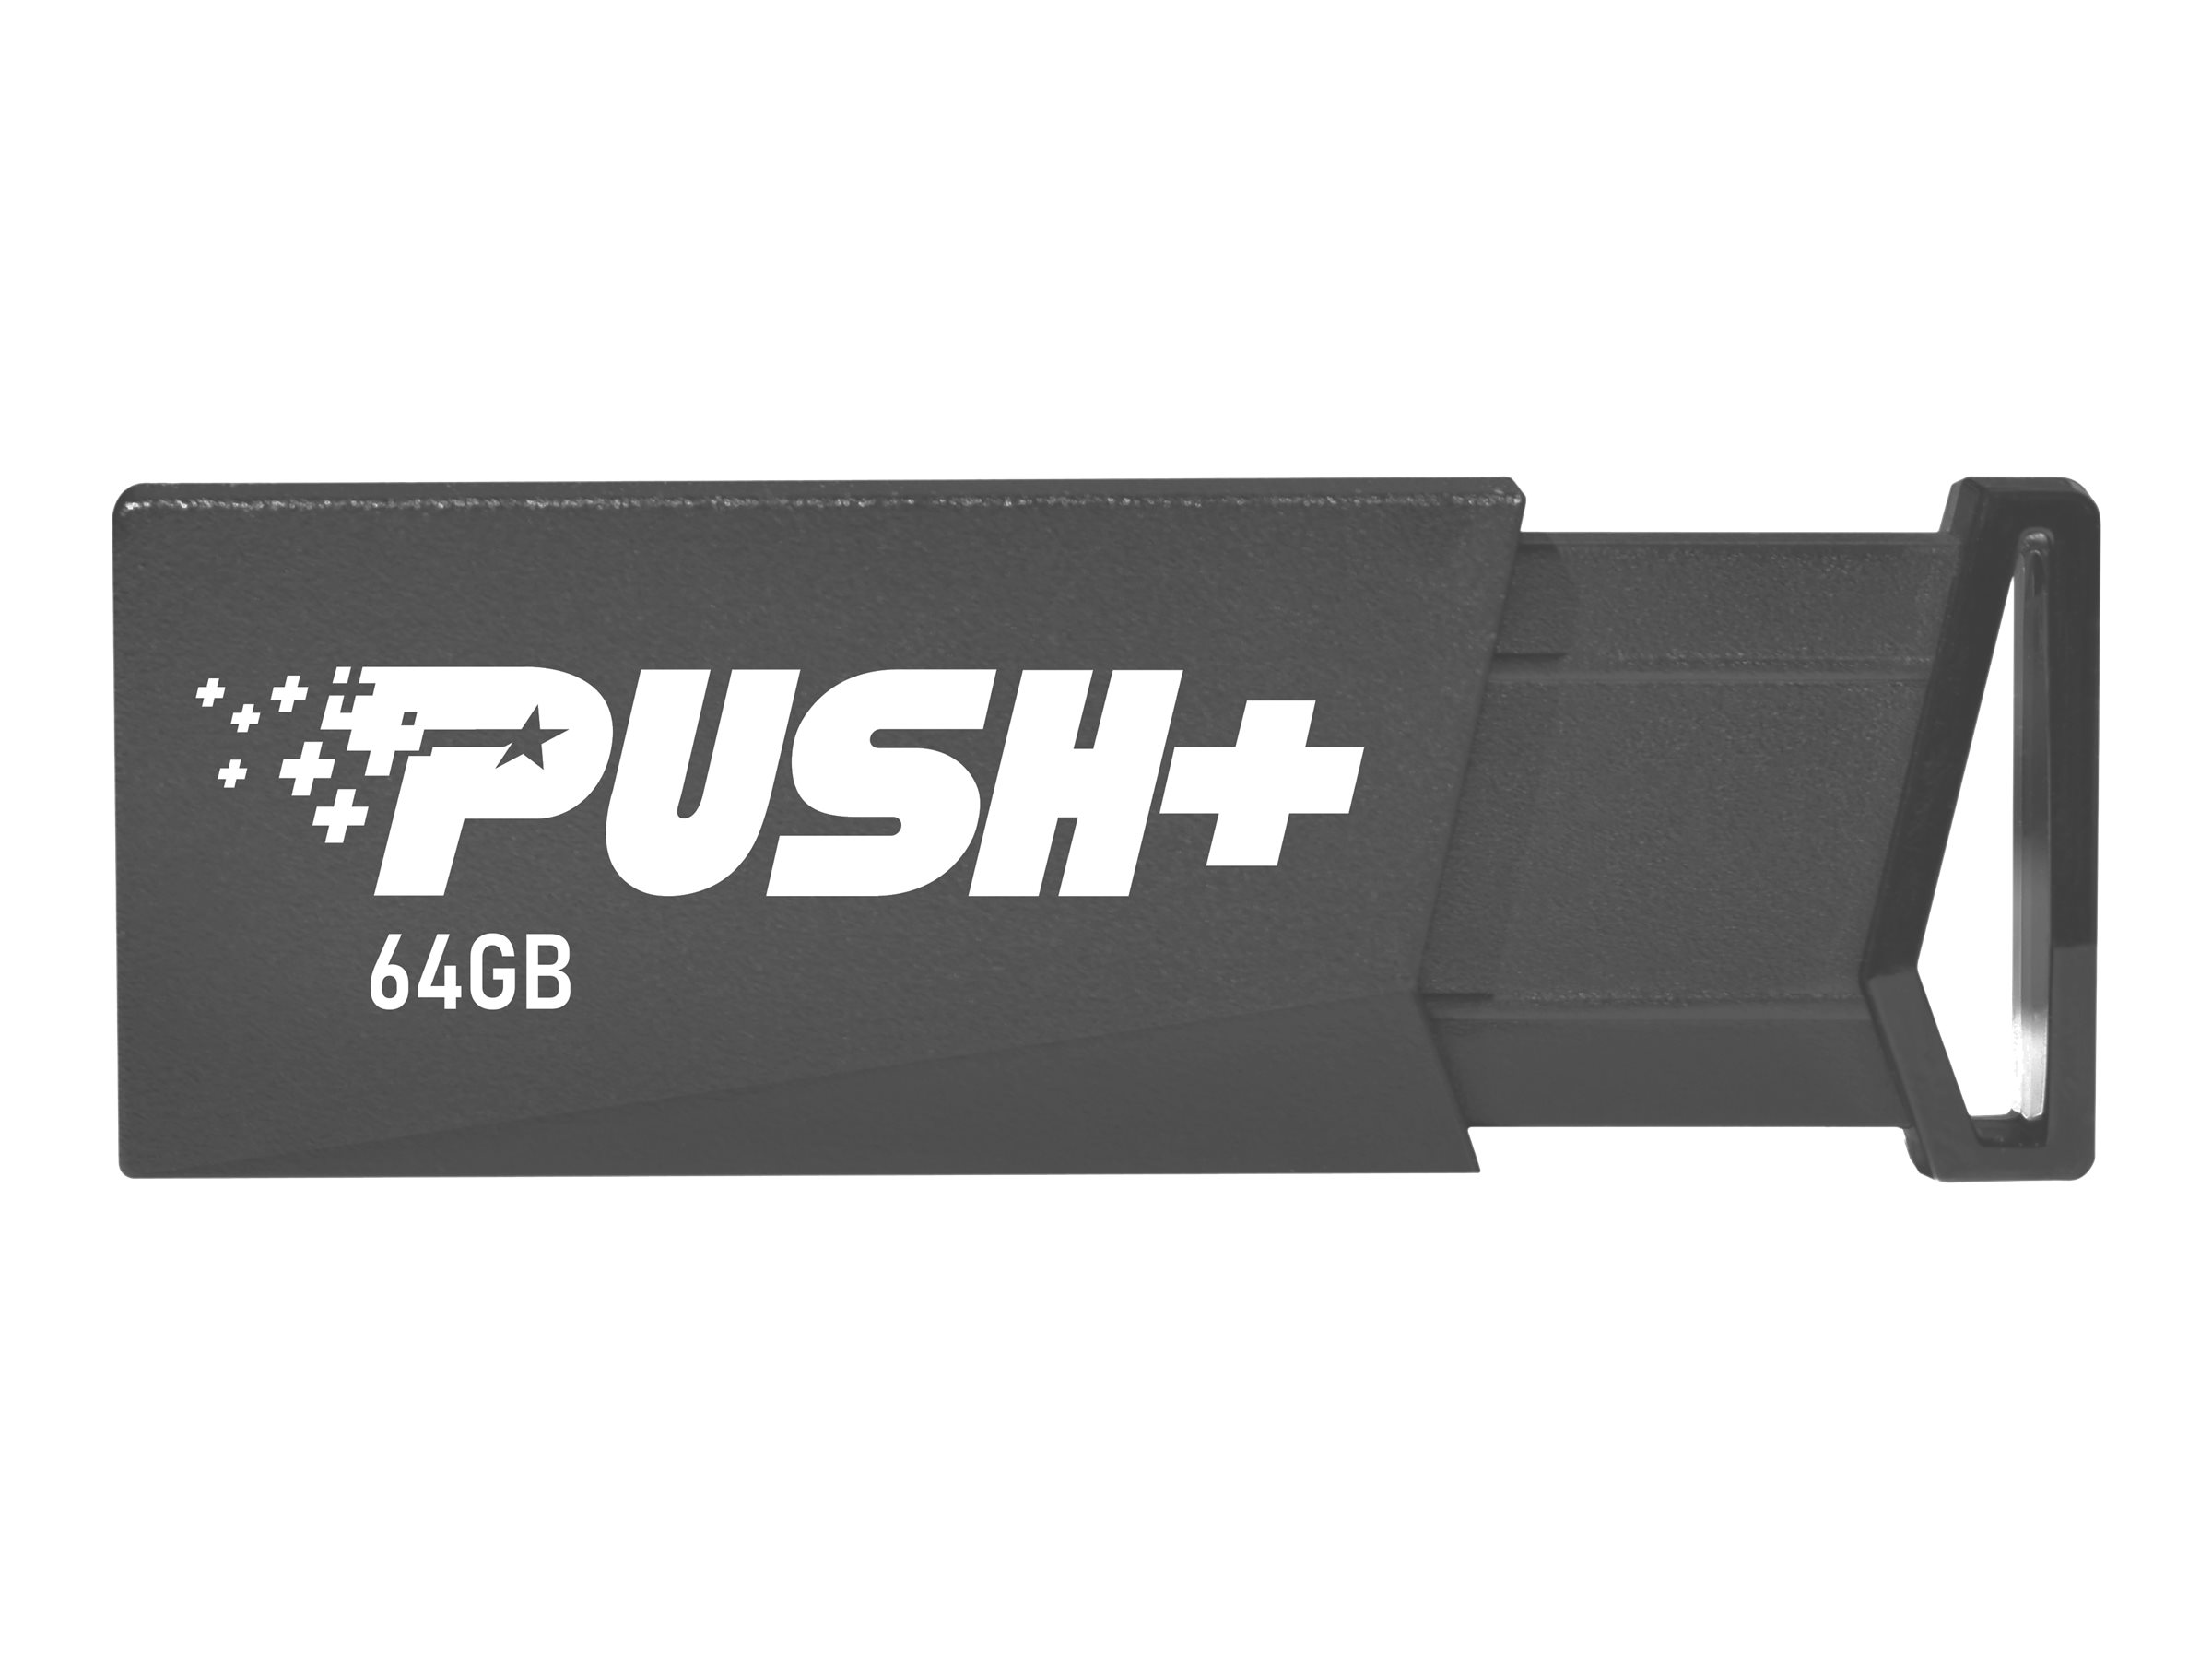 PATRIOT Push+ - USB-Flash-Laufwerk - 64 GB - USB 3.2 Gen 1